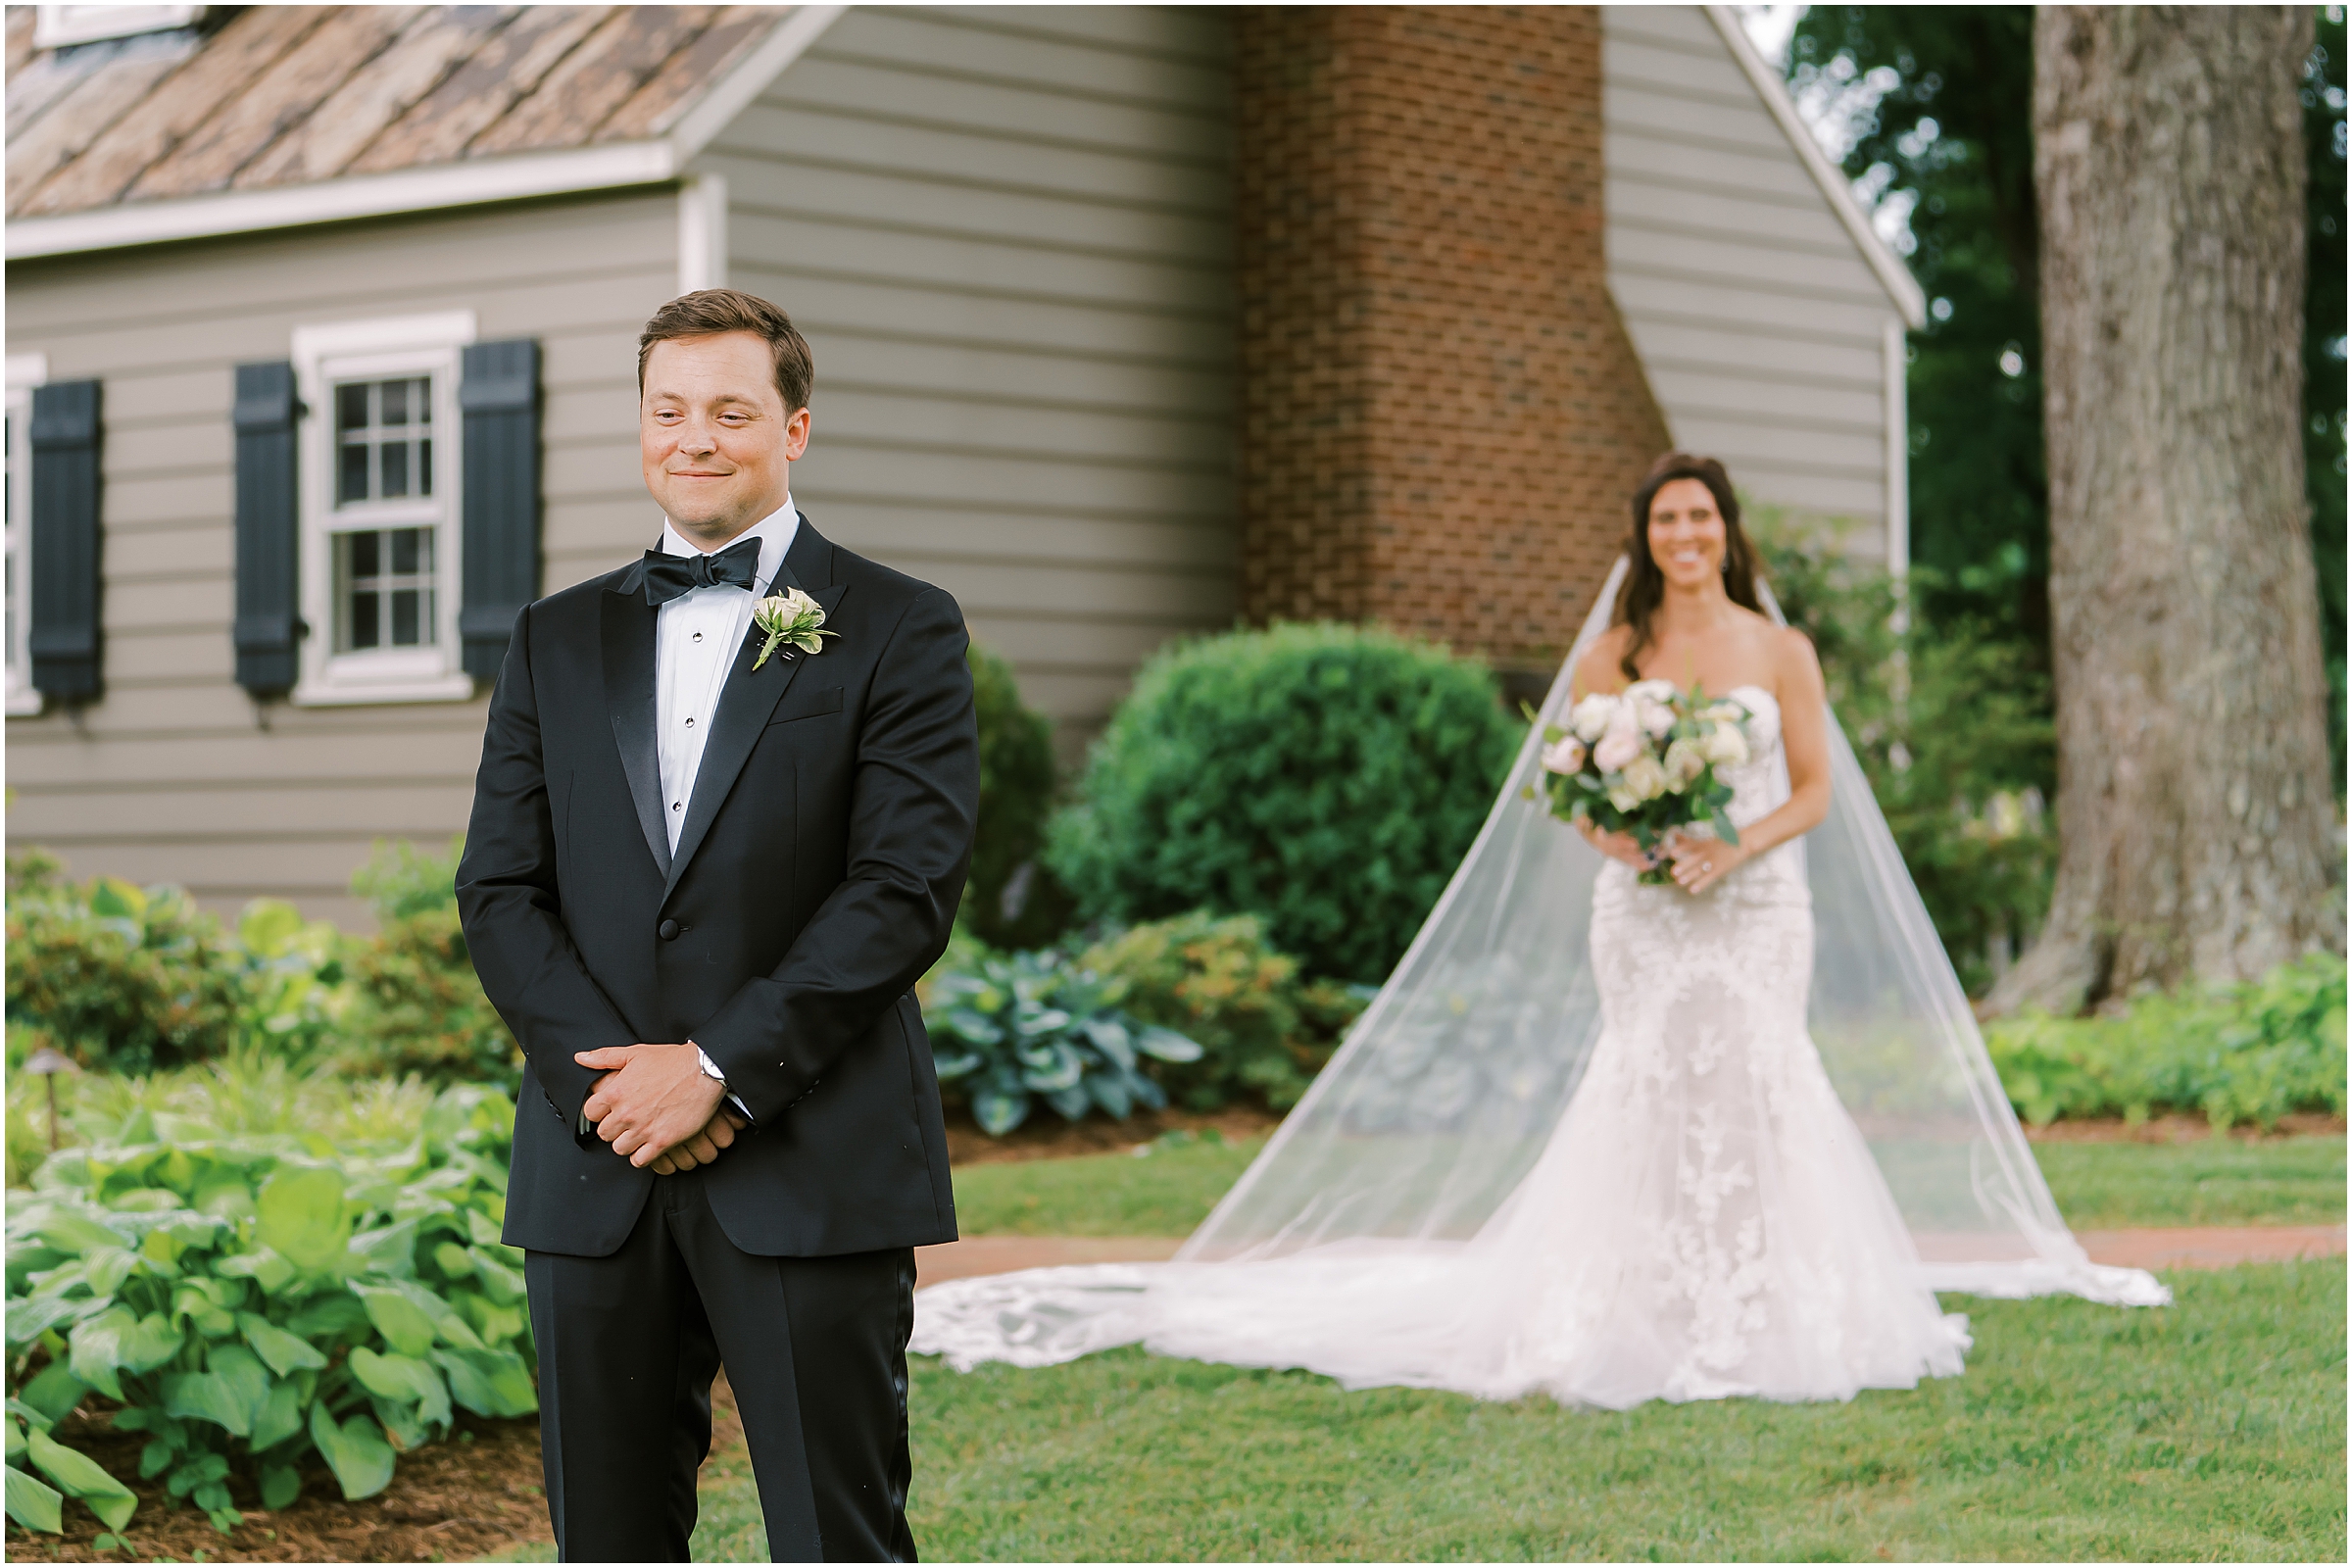 First look between bride and groom at Fleetwood Farm Winery in Leesburg, VA